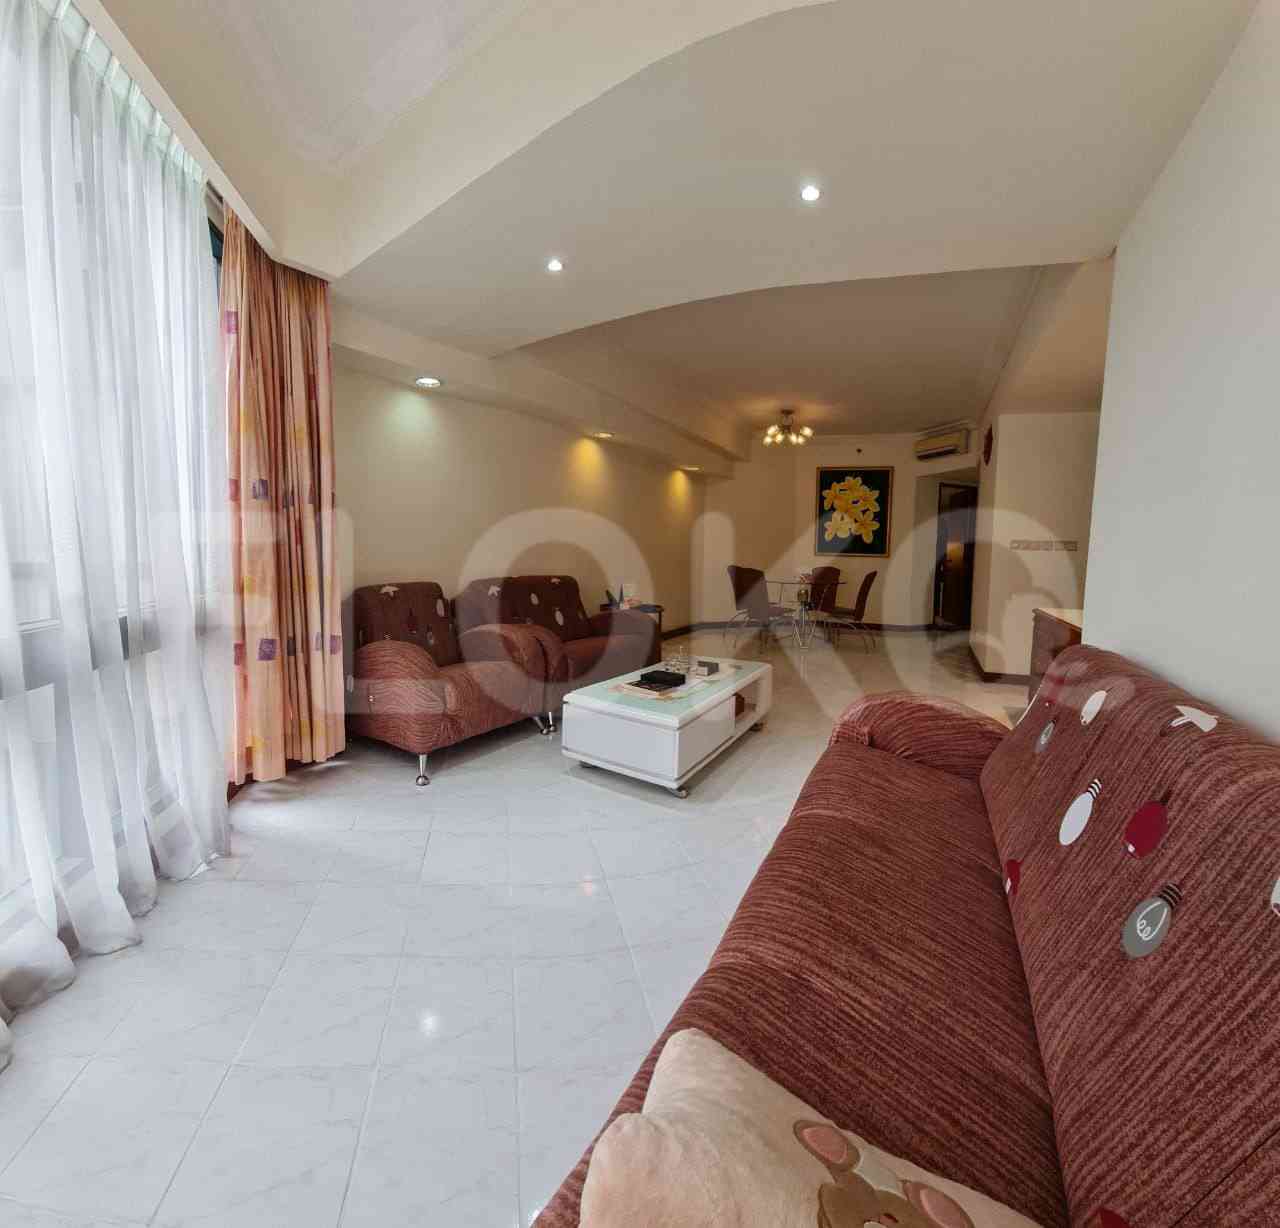 2 Bedroom on 30th Floor for Rent in Taman Anggrek Residence - fta4d8 4